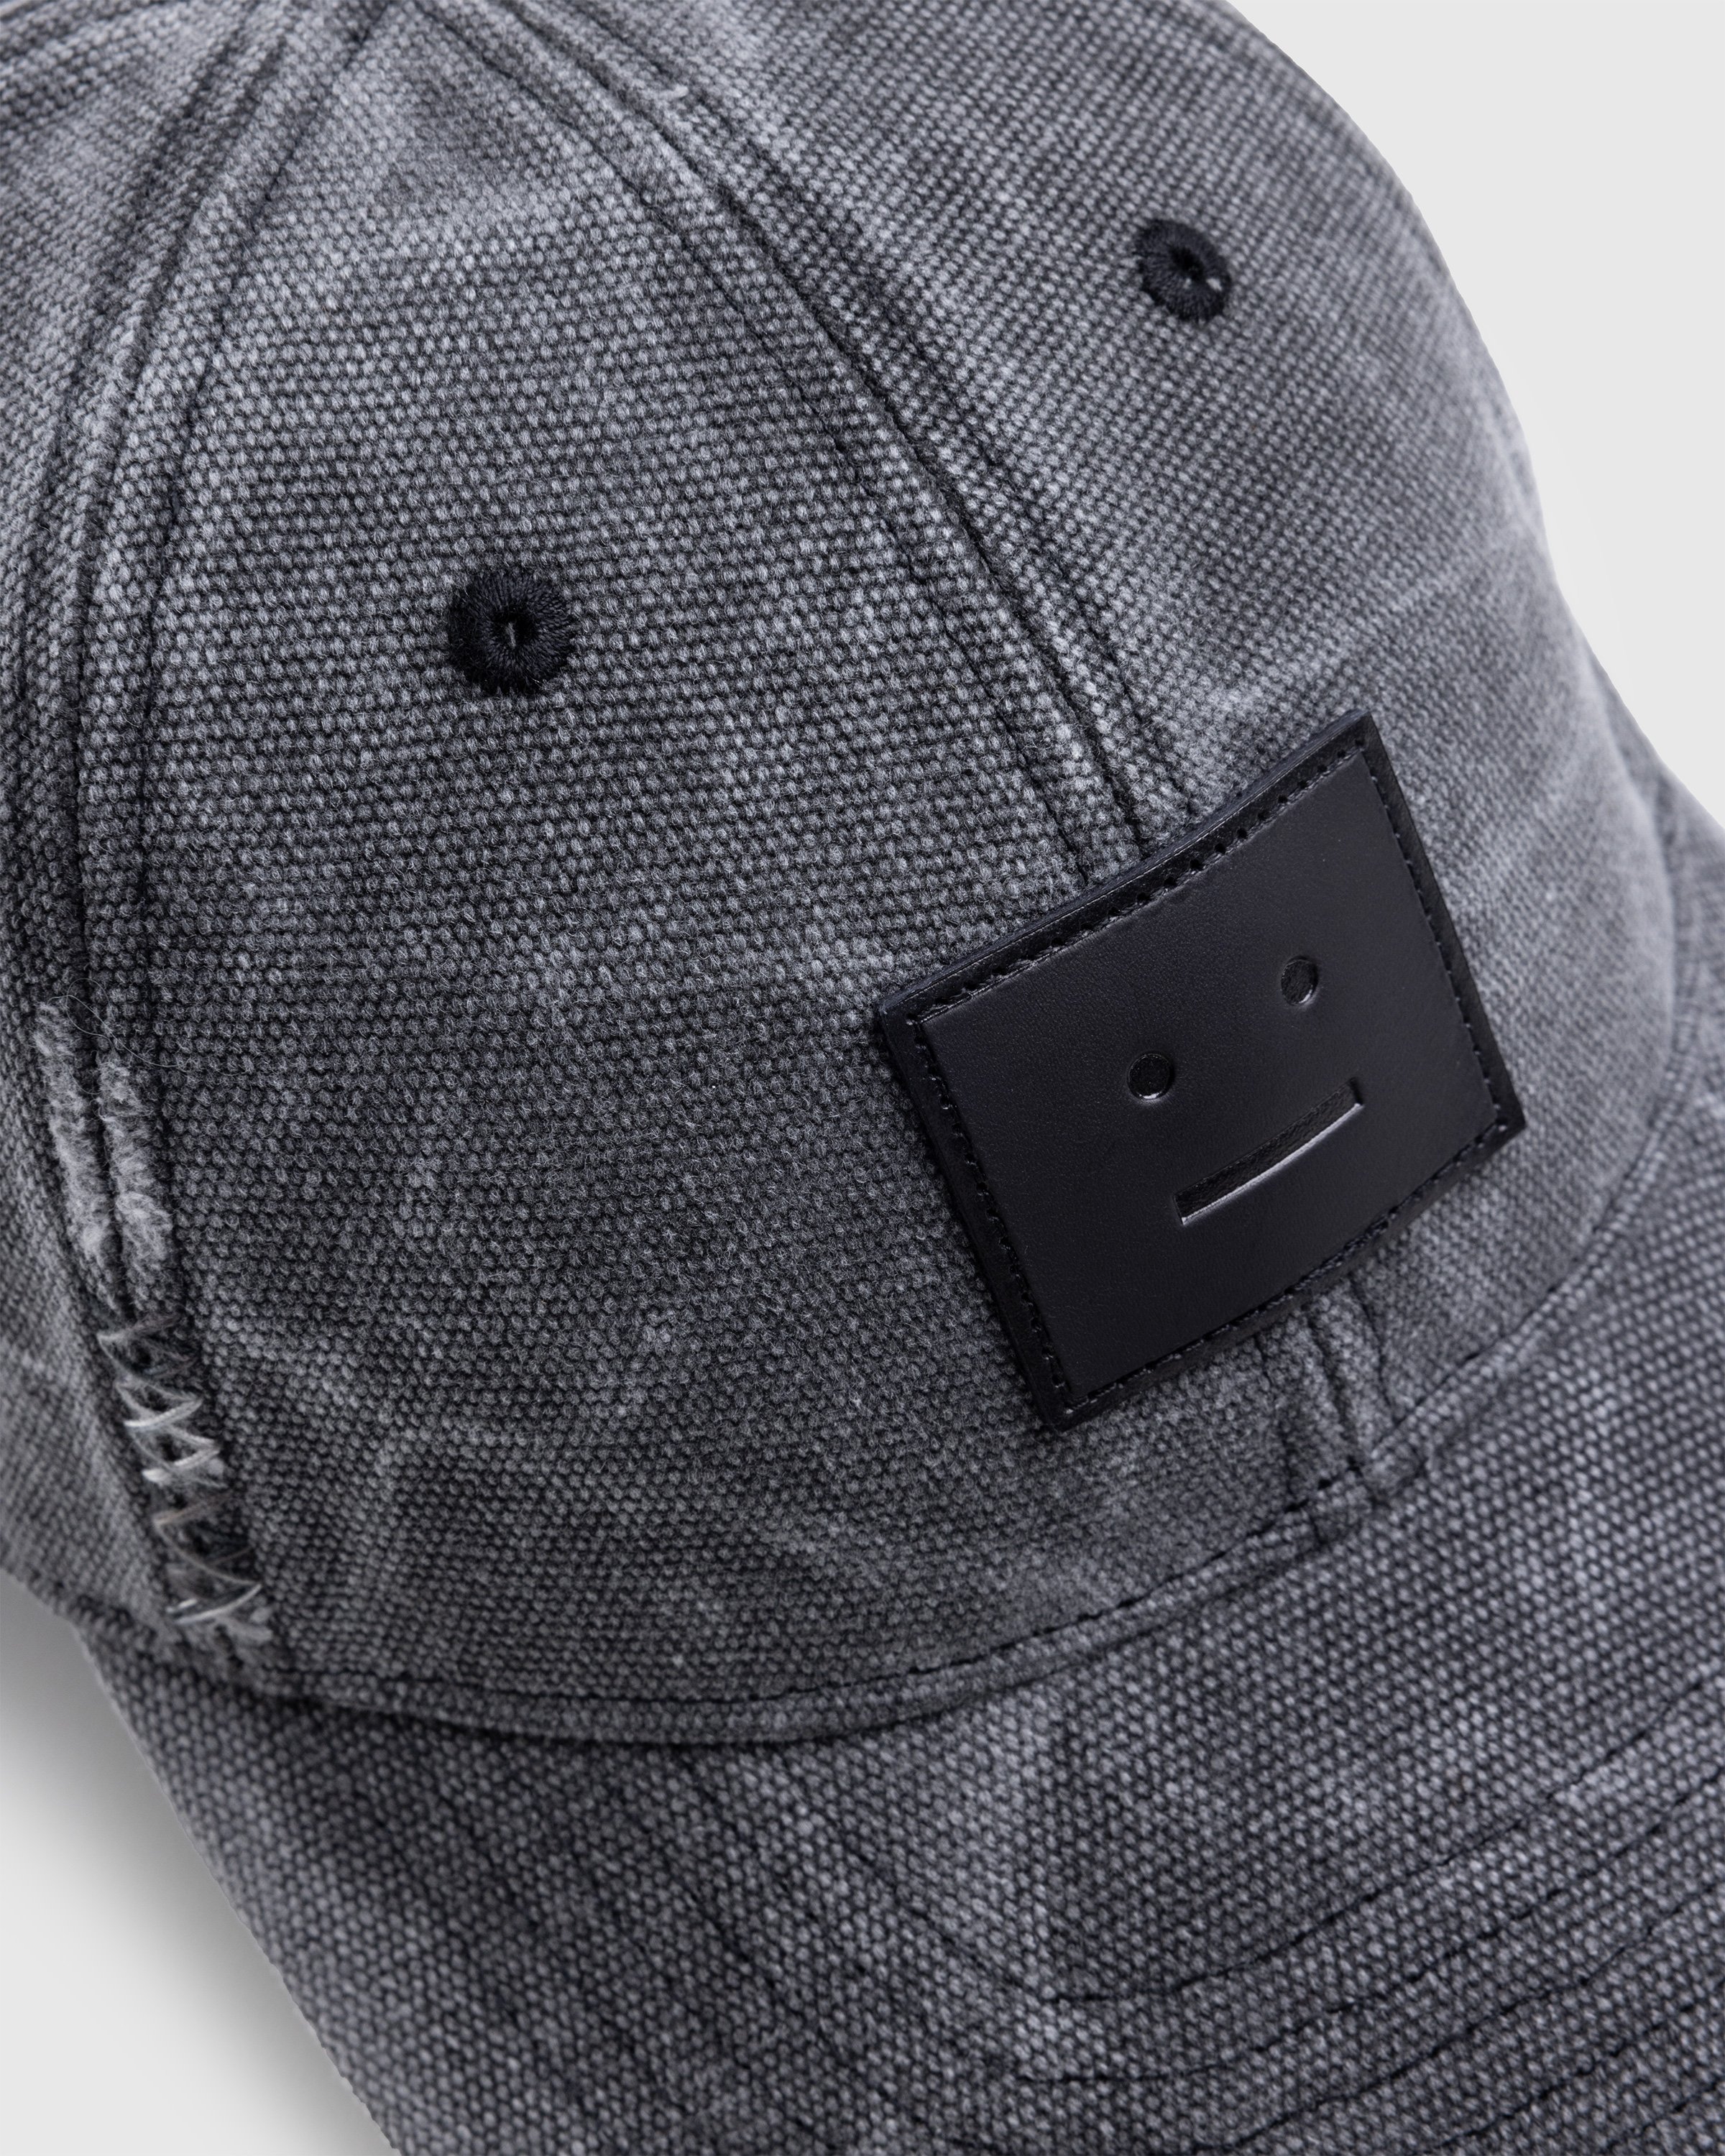 Acne Studios - Leather Face Patch Cap Carbon Grey - Accessories - Grey - Image 4